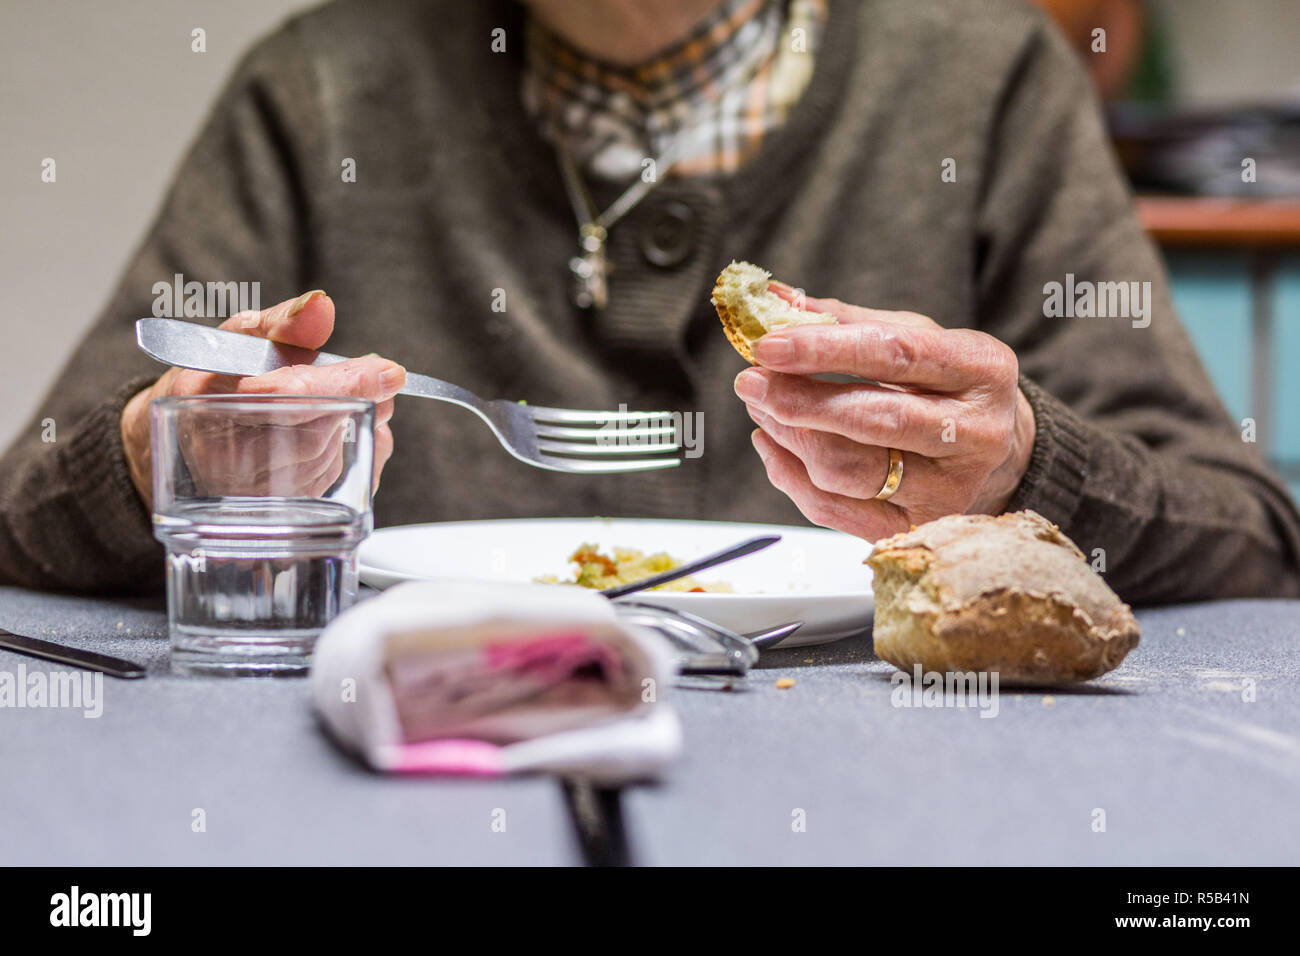 Elderly person eating. Stock Photo